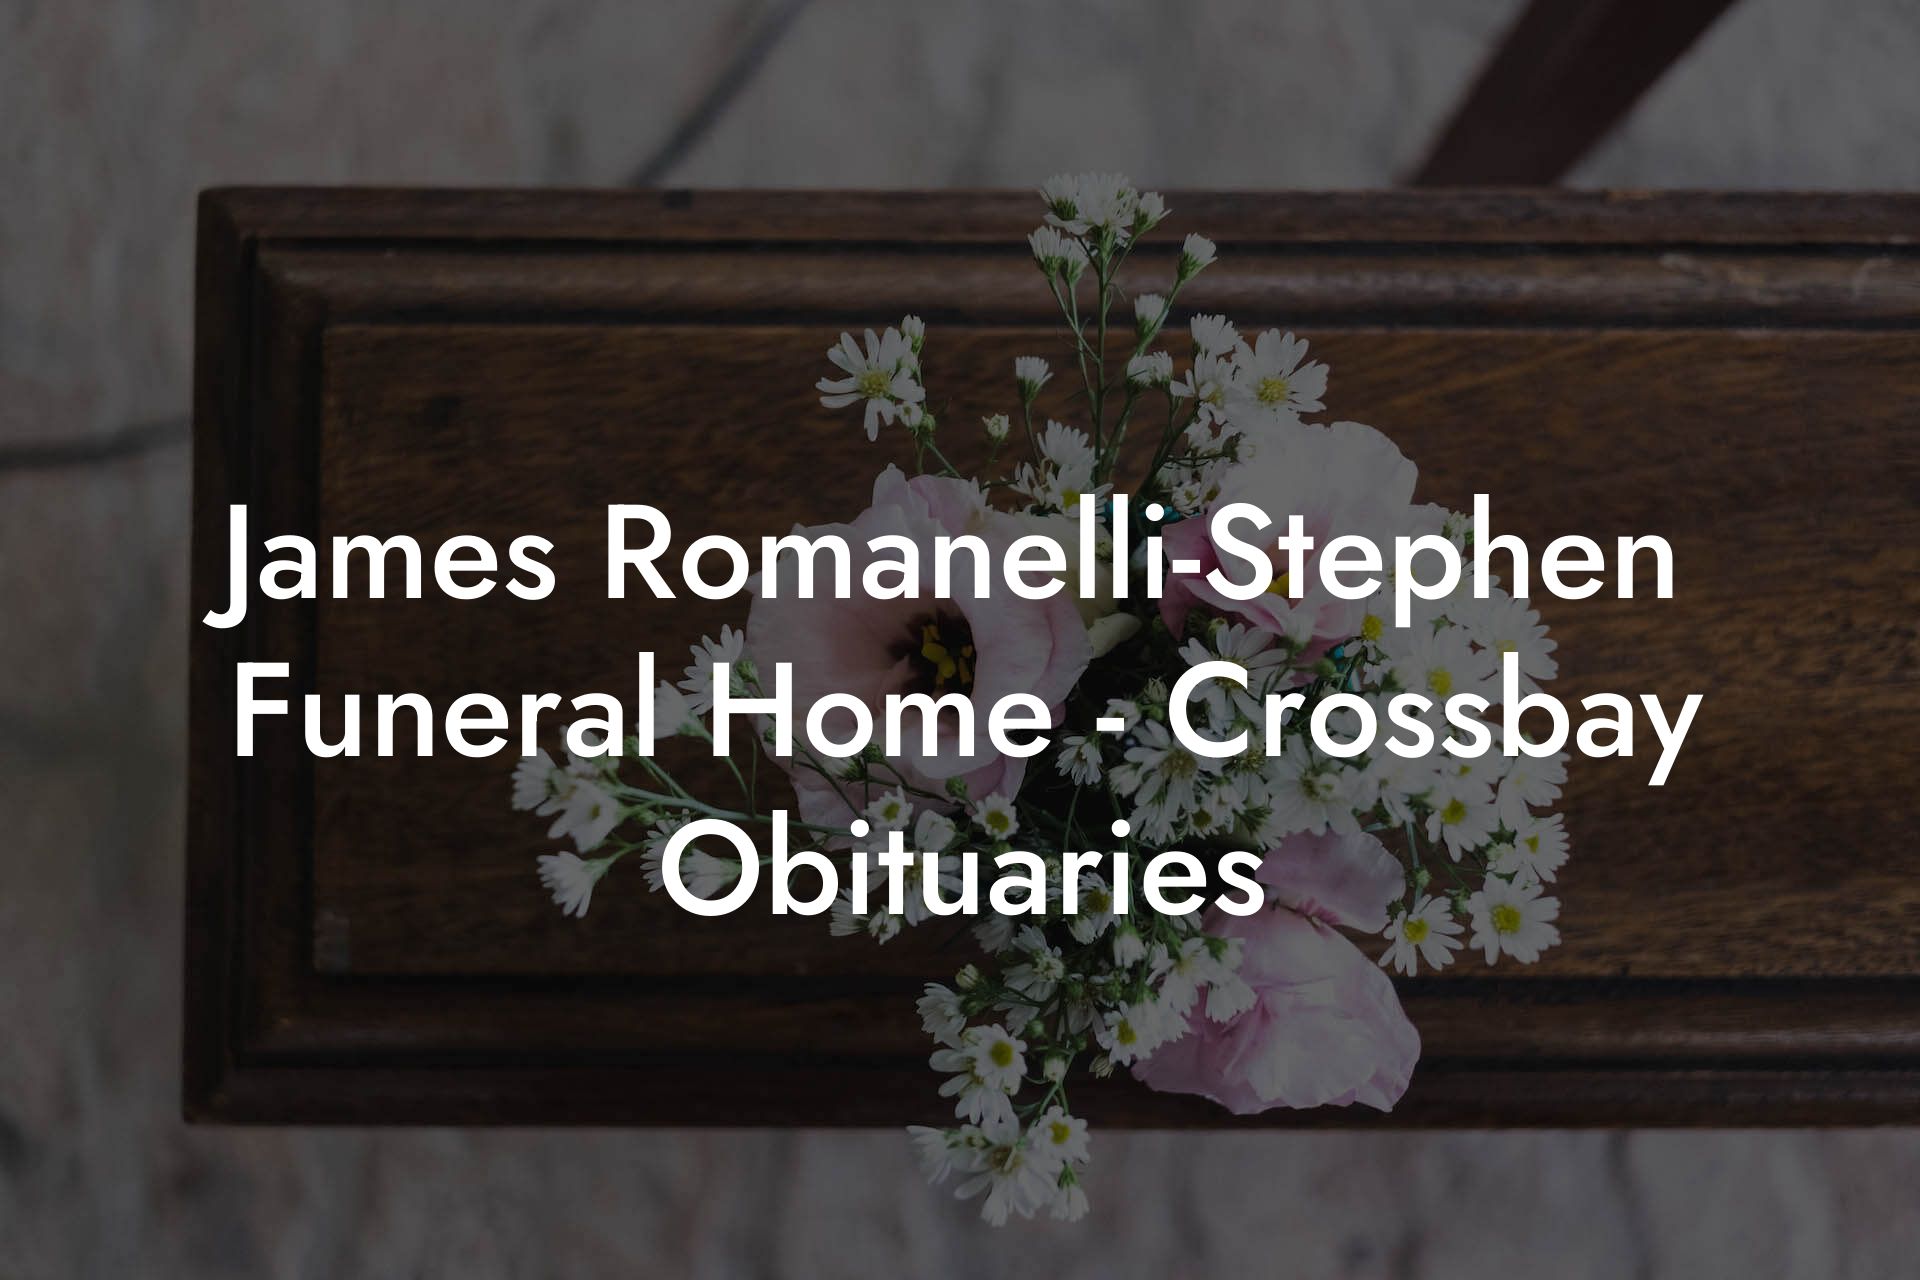 James Romanelli-Stephen Funeral Home - Crossbay Obituaries